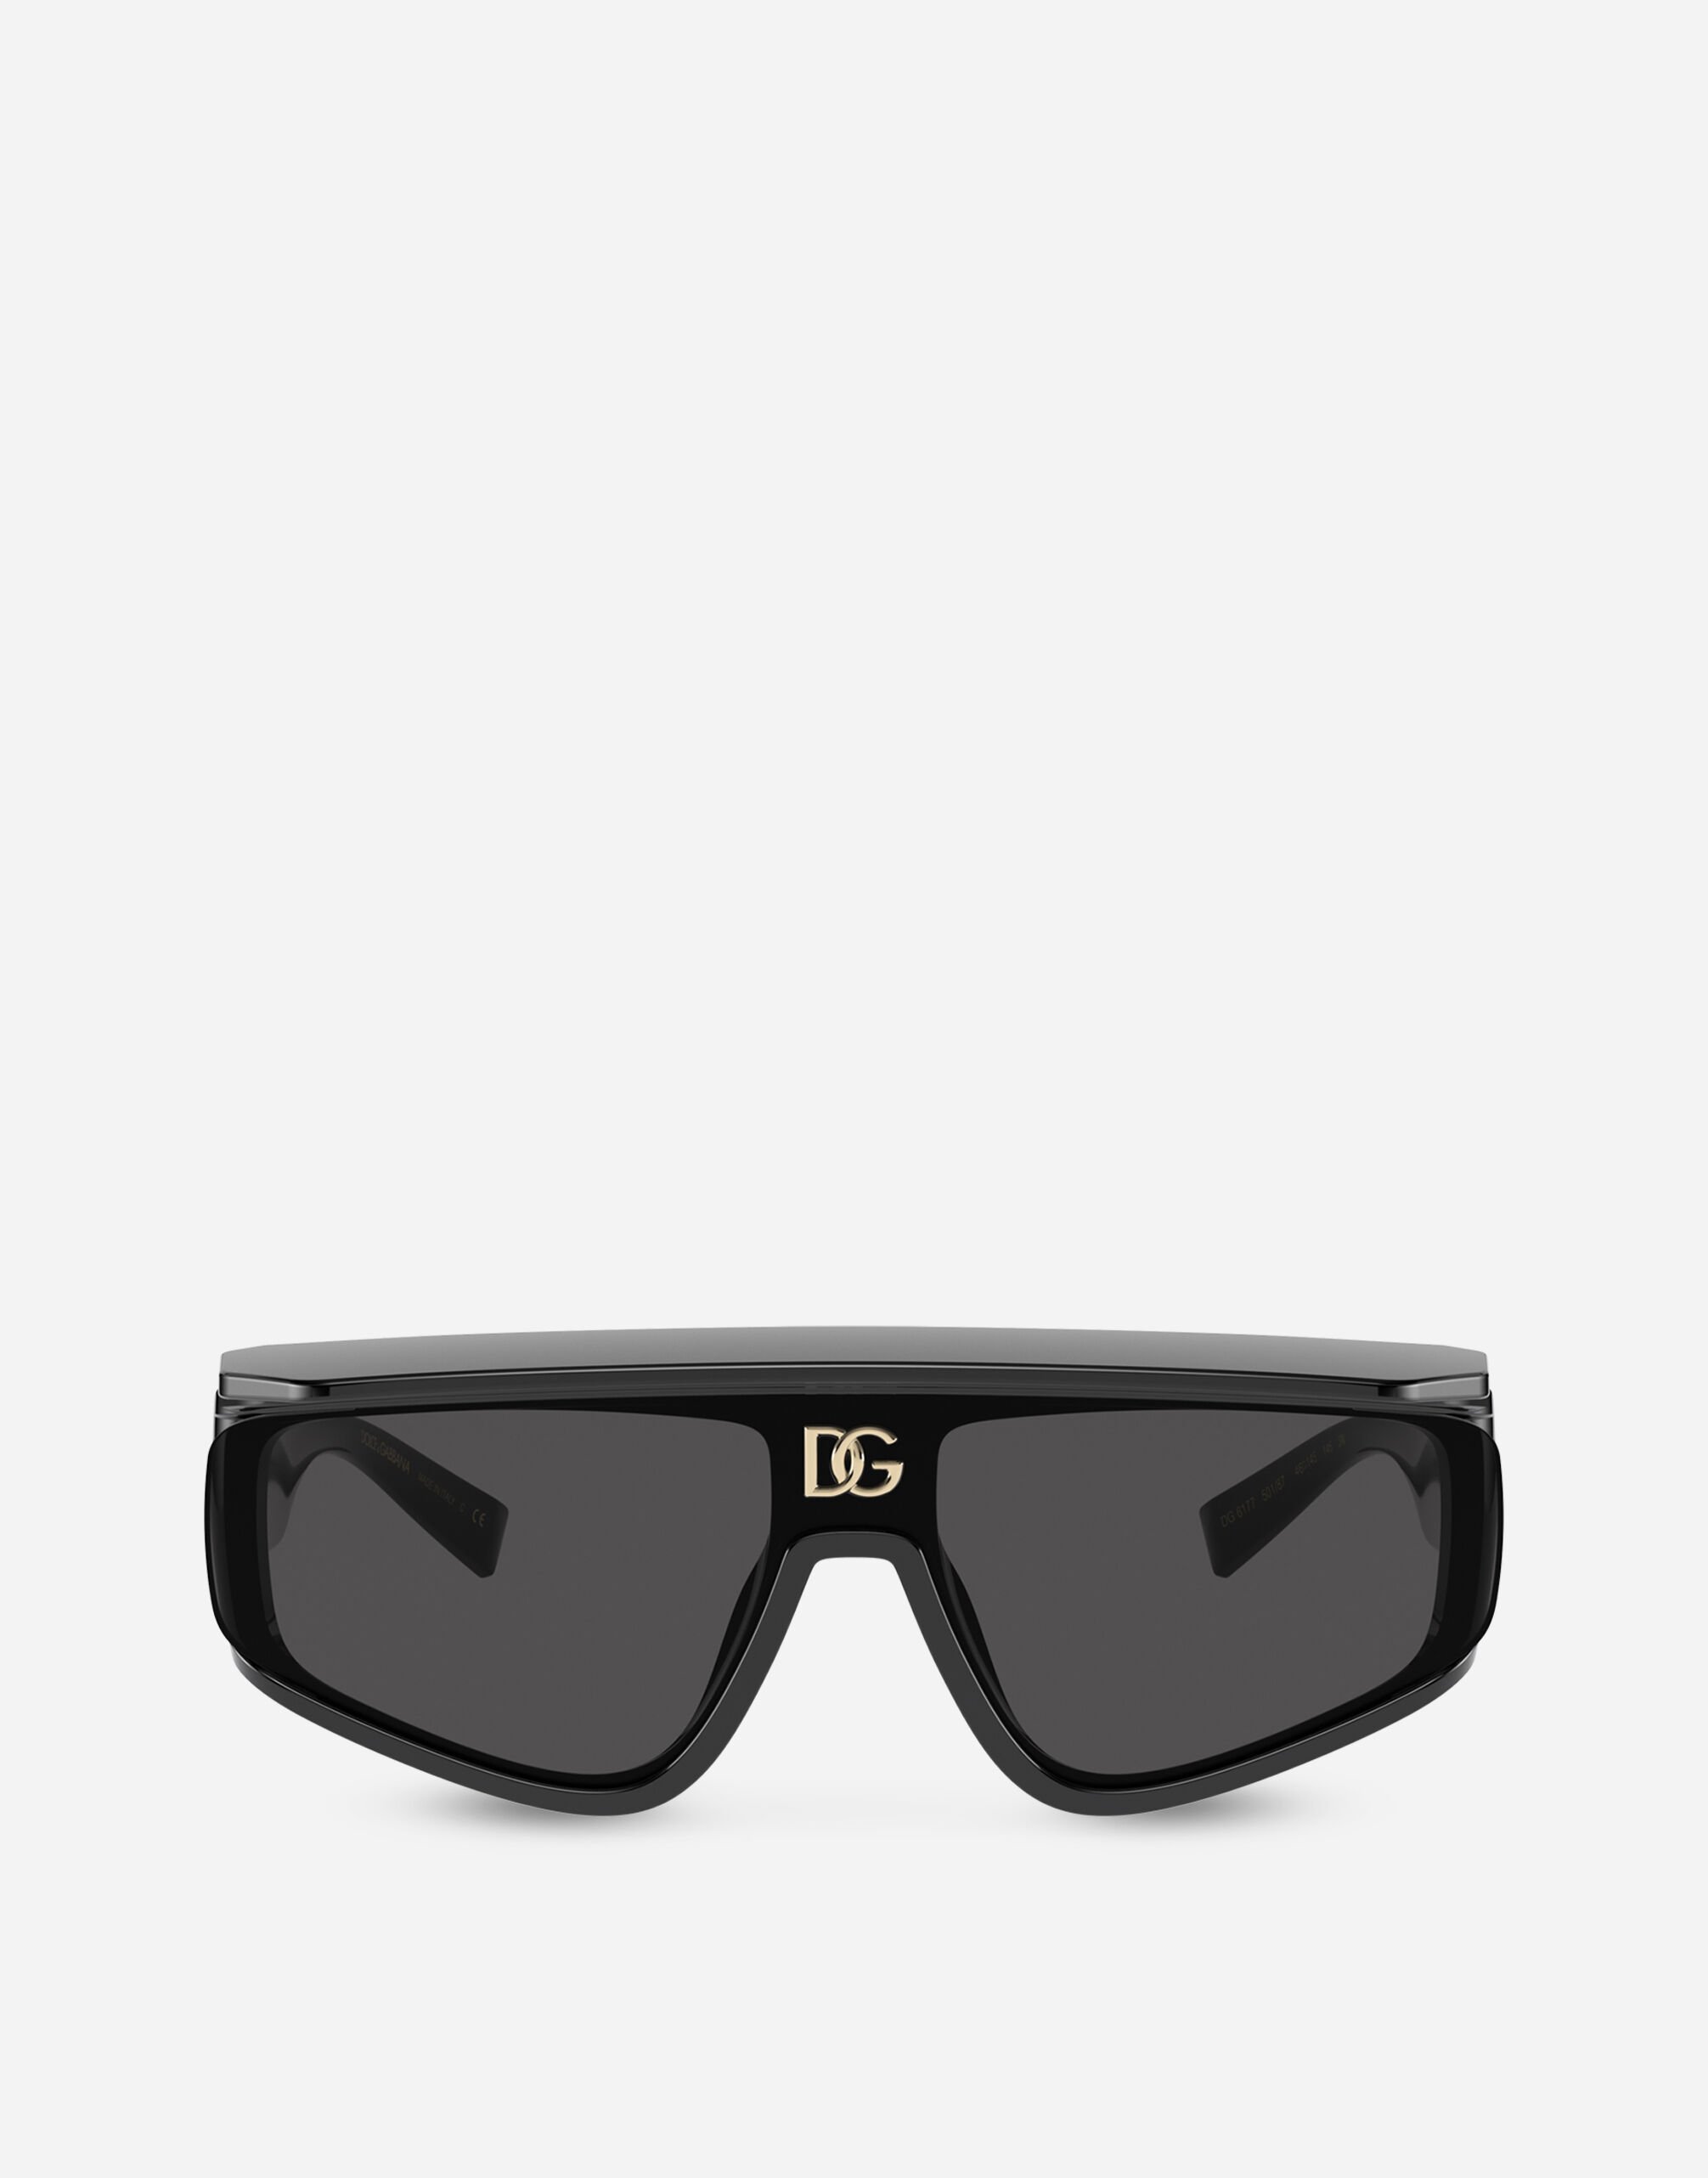 Dolce & Gabbana DG crossed sunglasses Gold and Black VG2285VM281